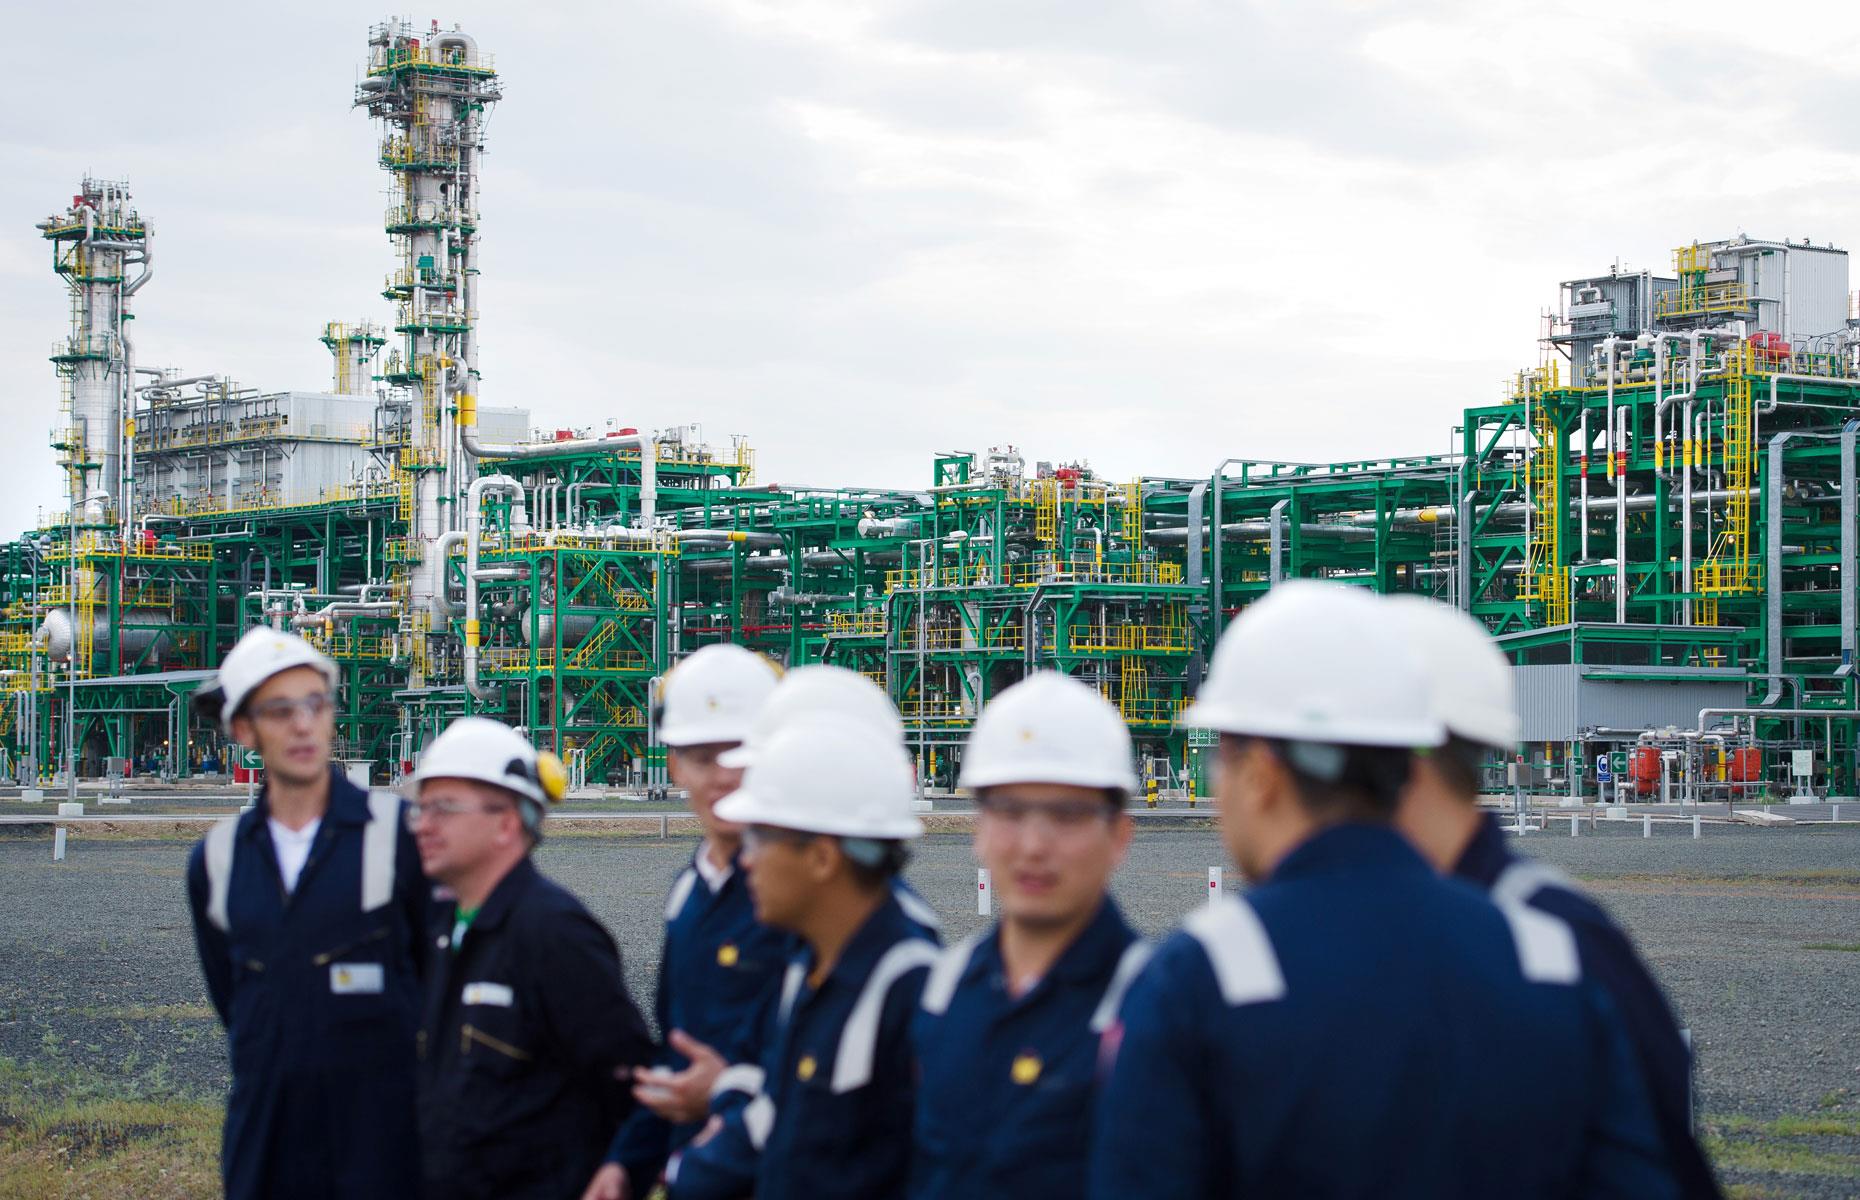 13. Kazakhstan: 1.811 million barrels per day